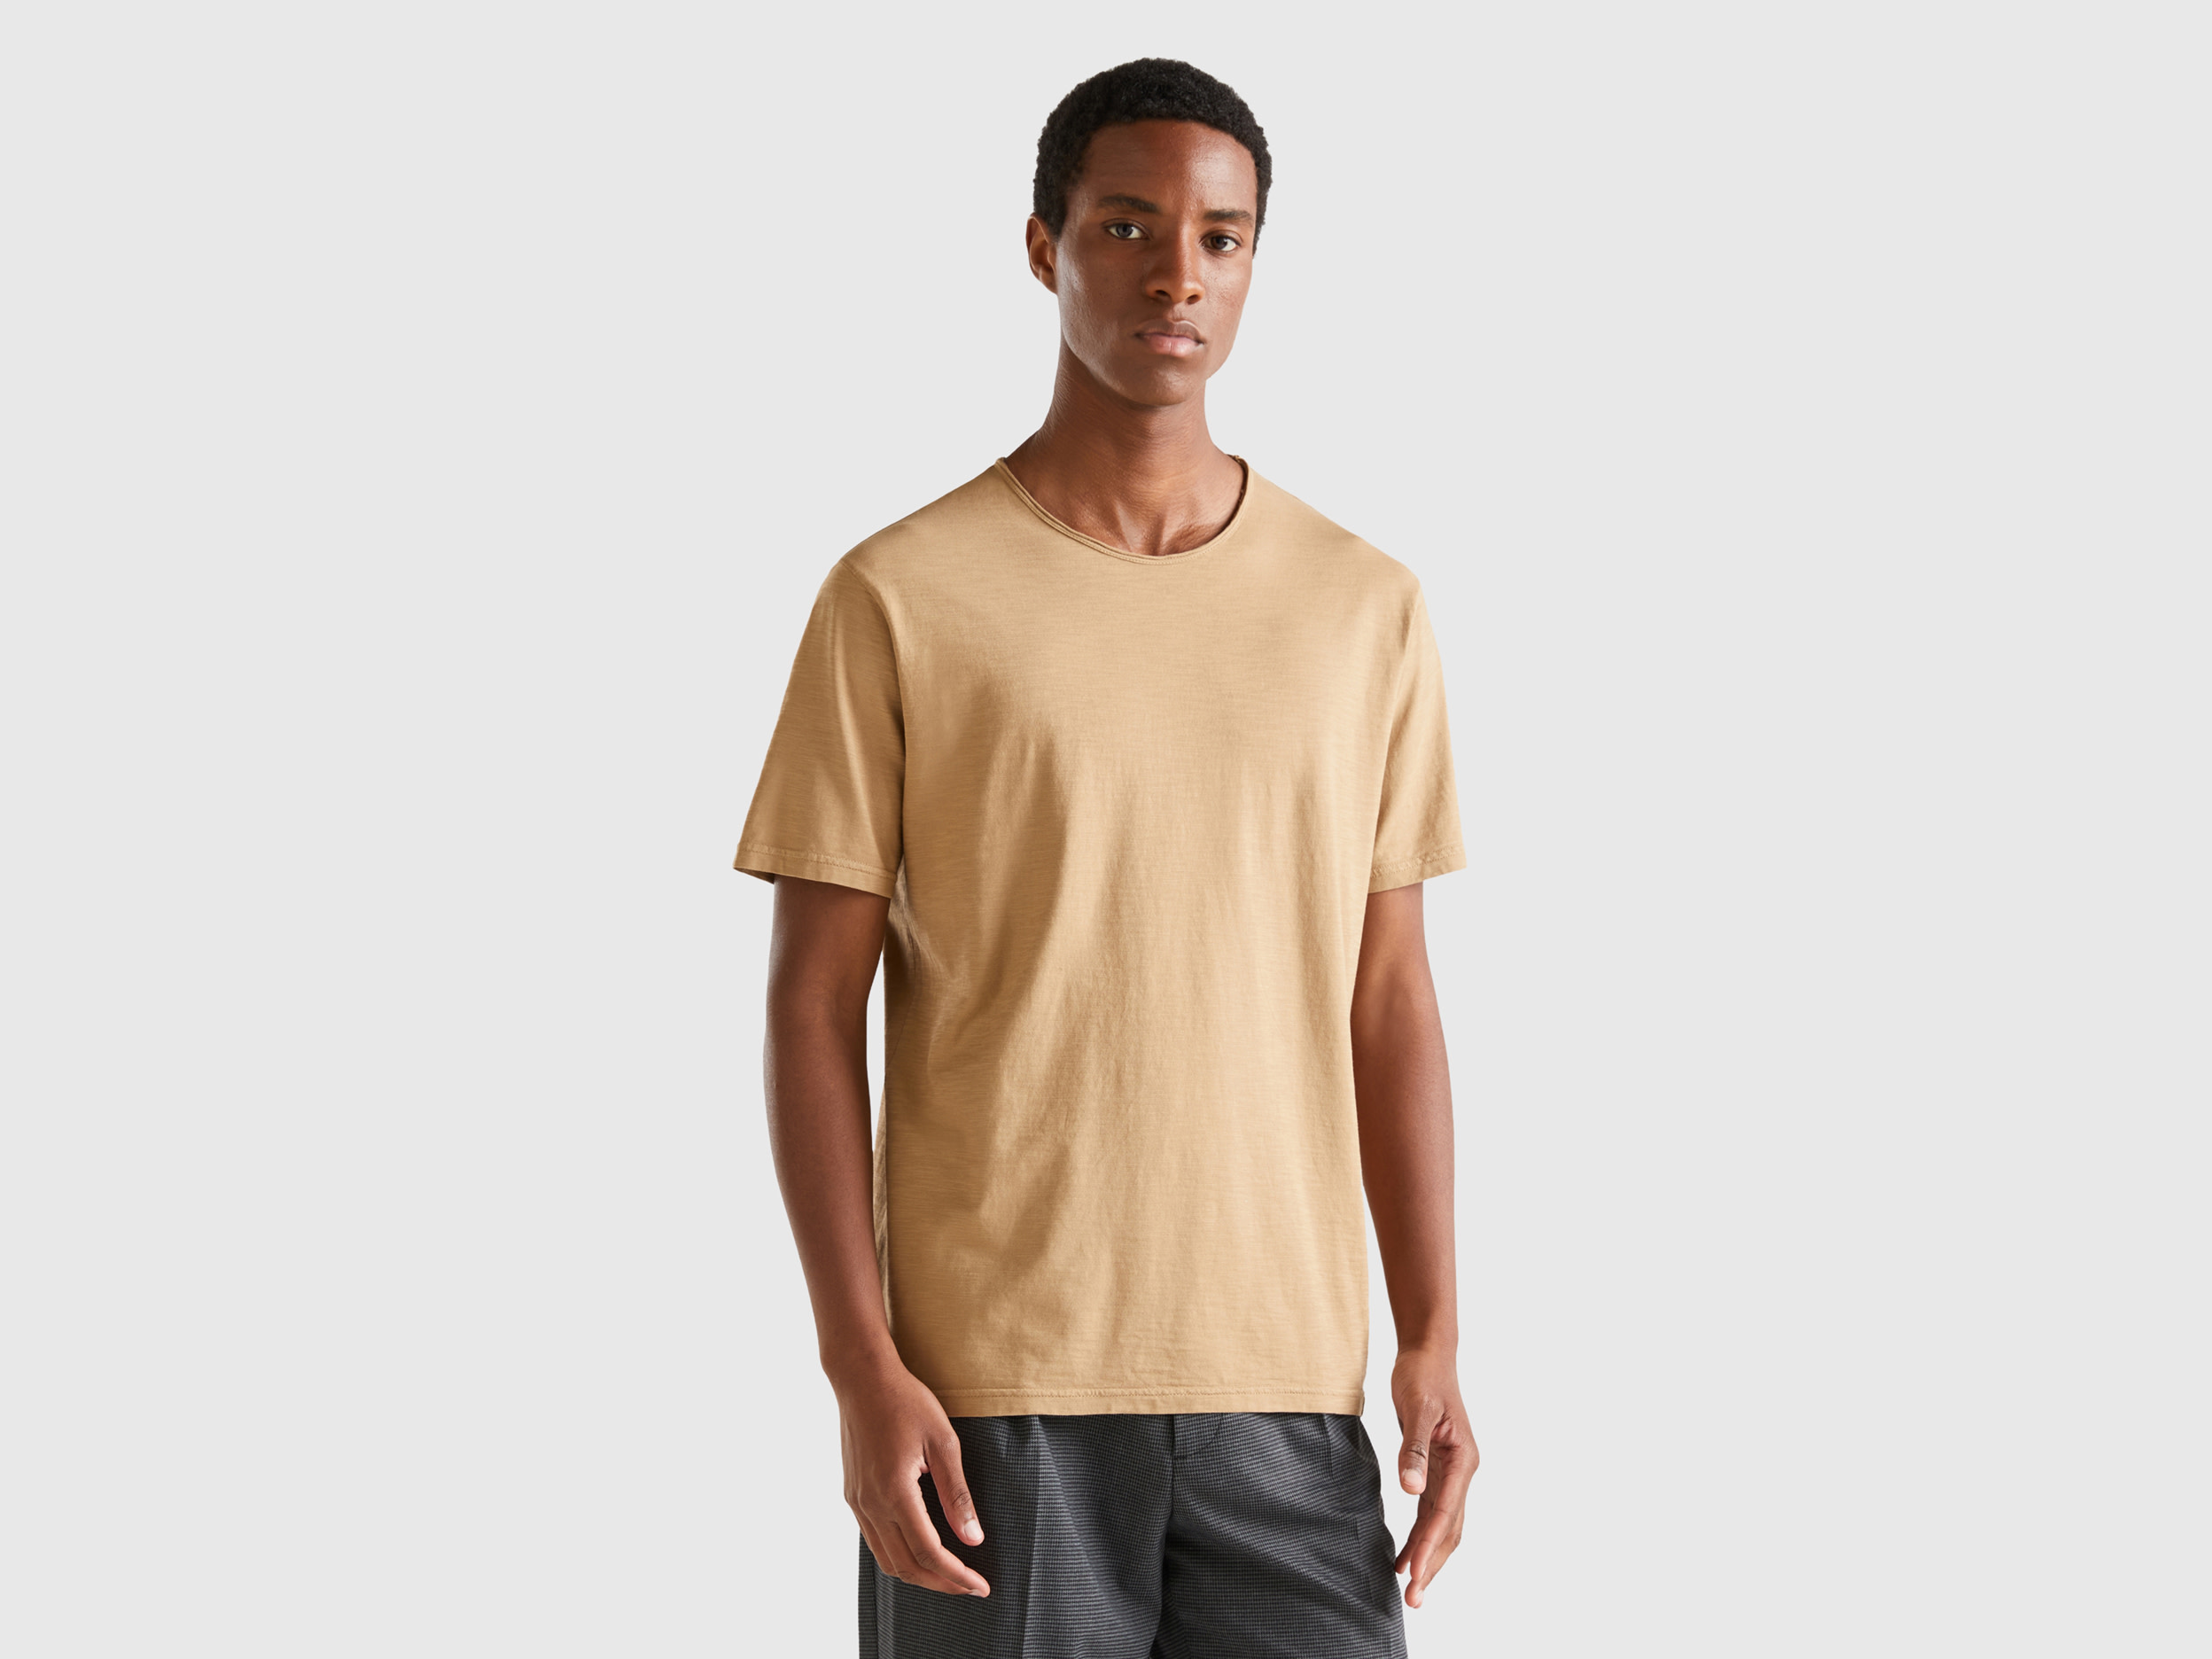 Benetton, Camel T-shirt In Slub Cotton, size L, Camel, Men